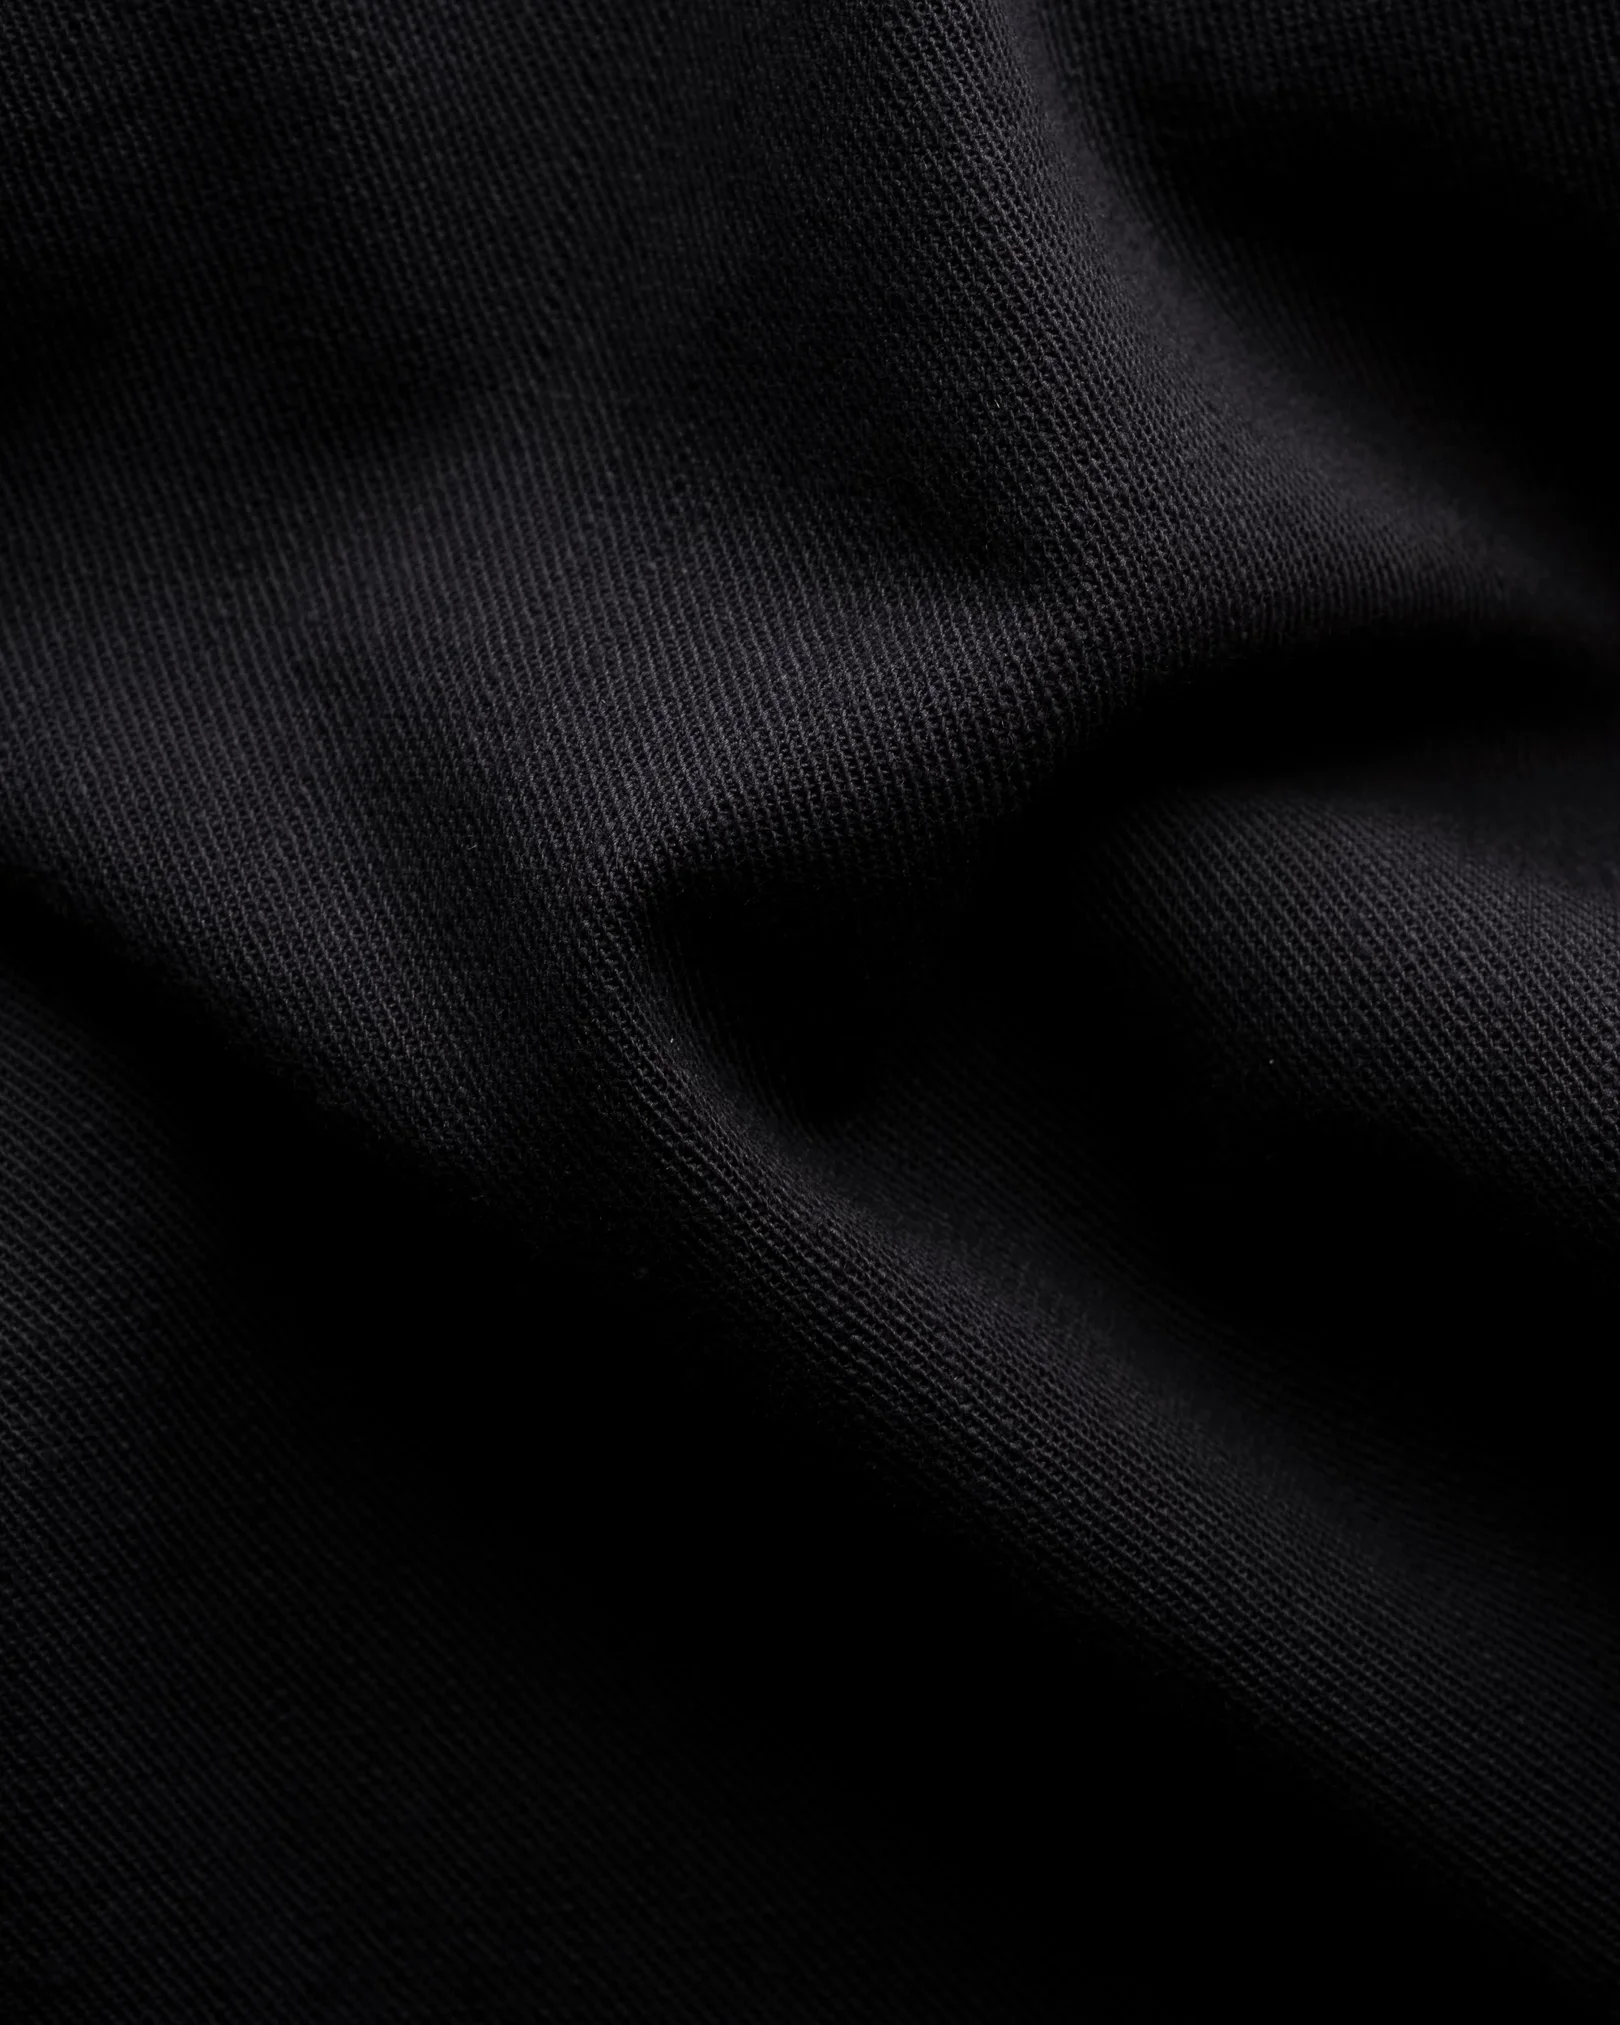 Eton - Black Denim Twill Shirt